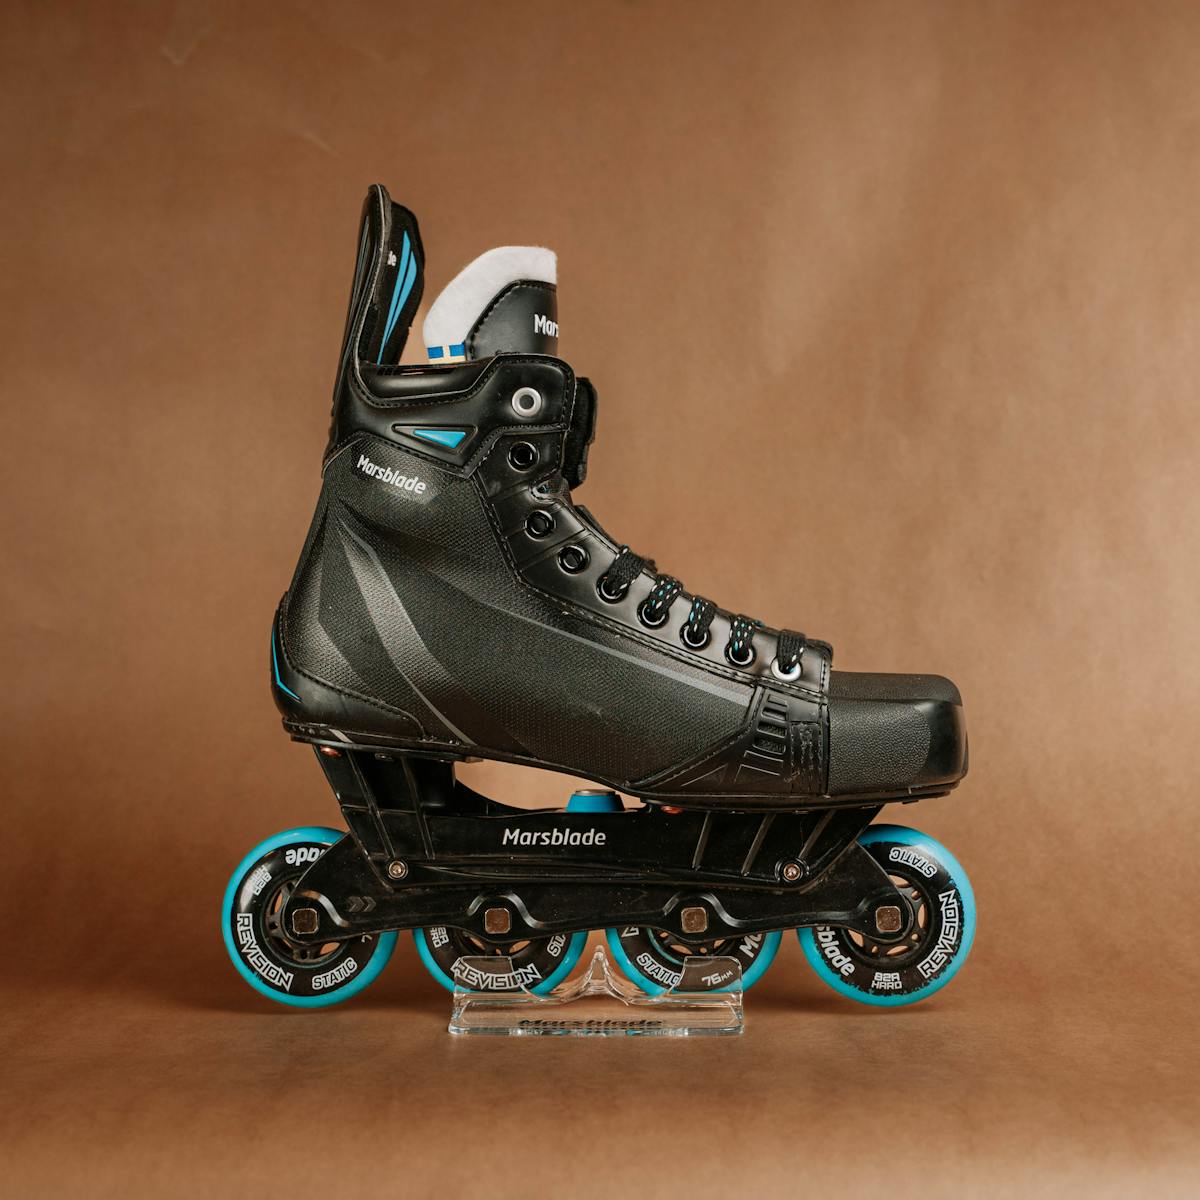 Marsblade Re:skate Team